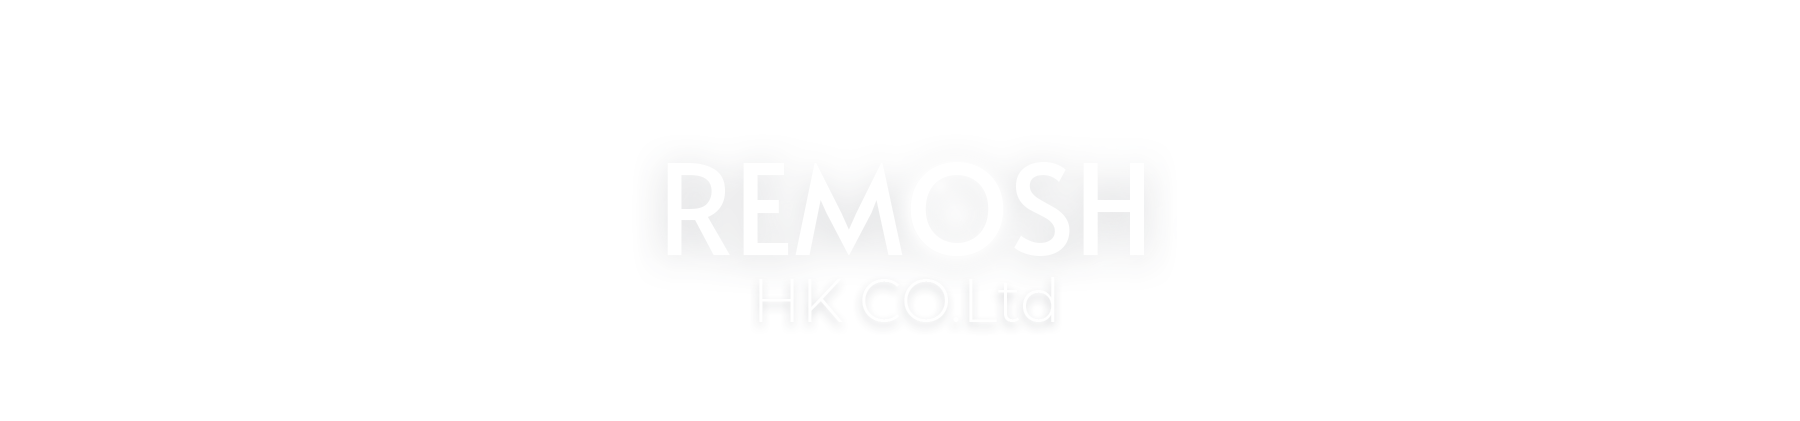 remosh_logo